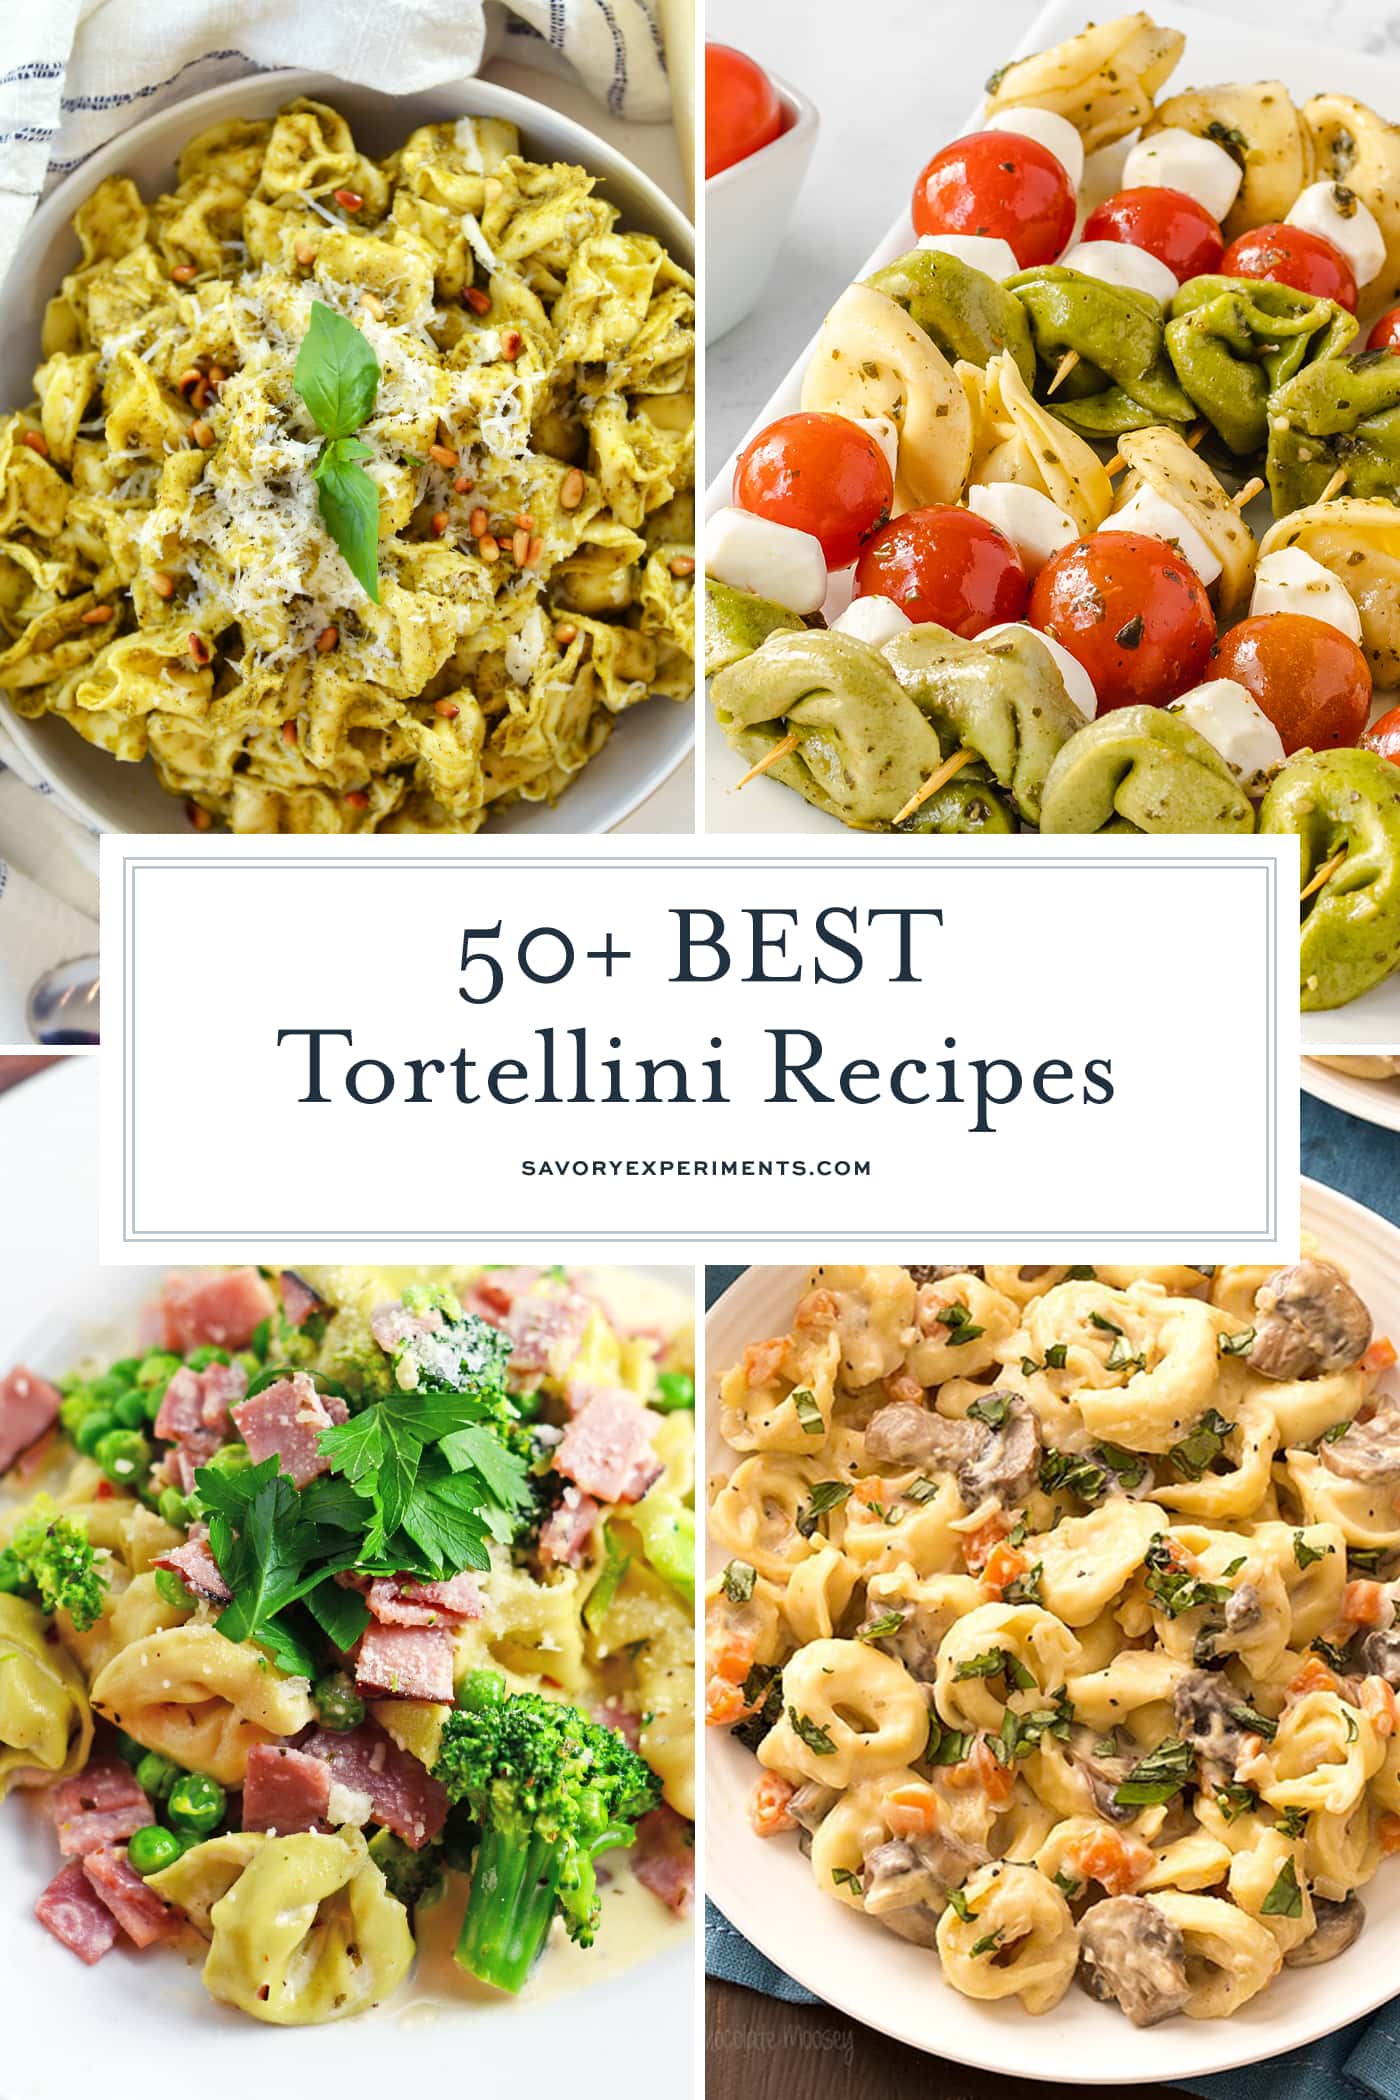 https://www.savoryexperiments.com/wp-content/uploads/2021/09/tortellini-recipes.jpg